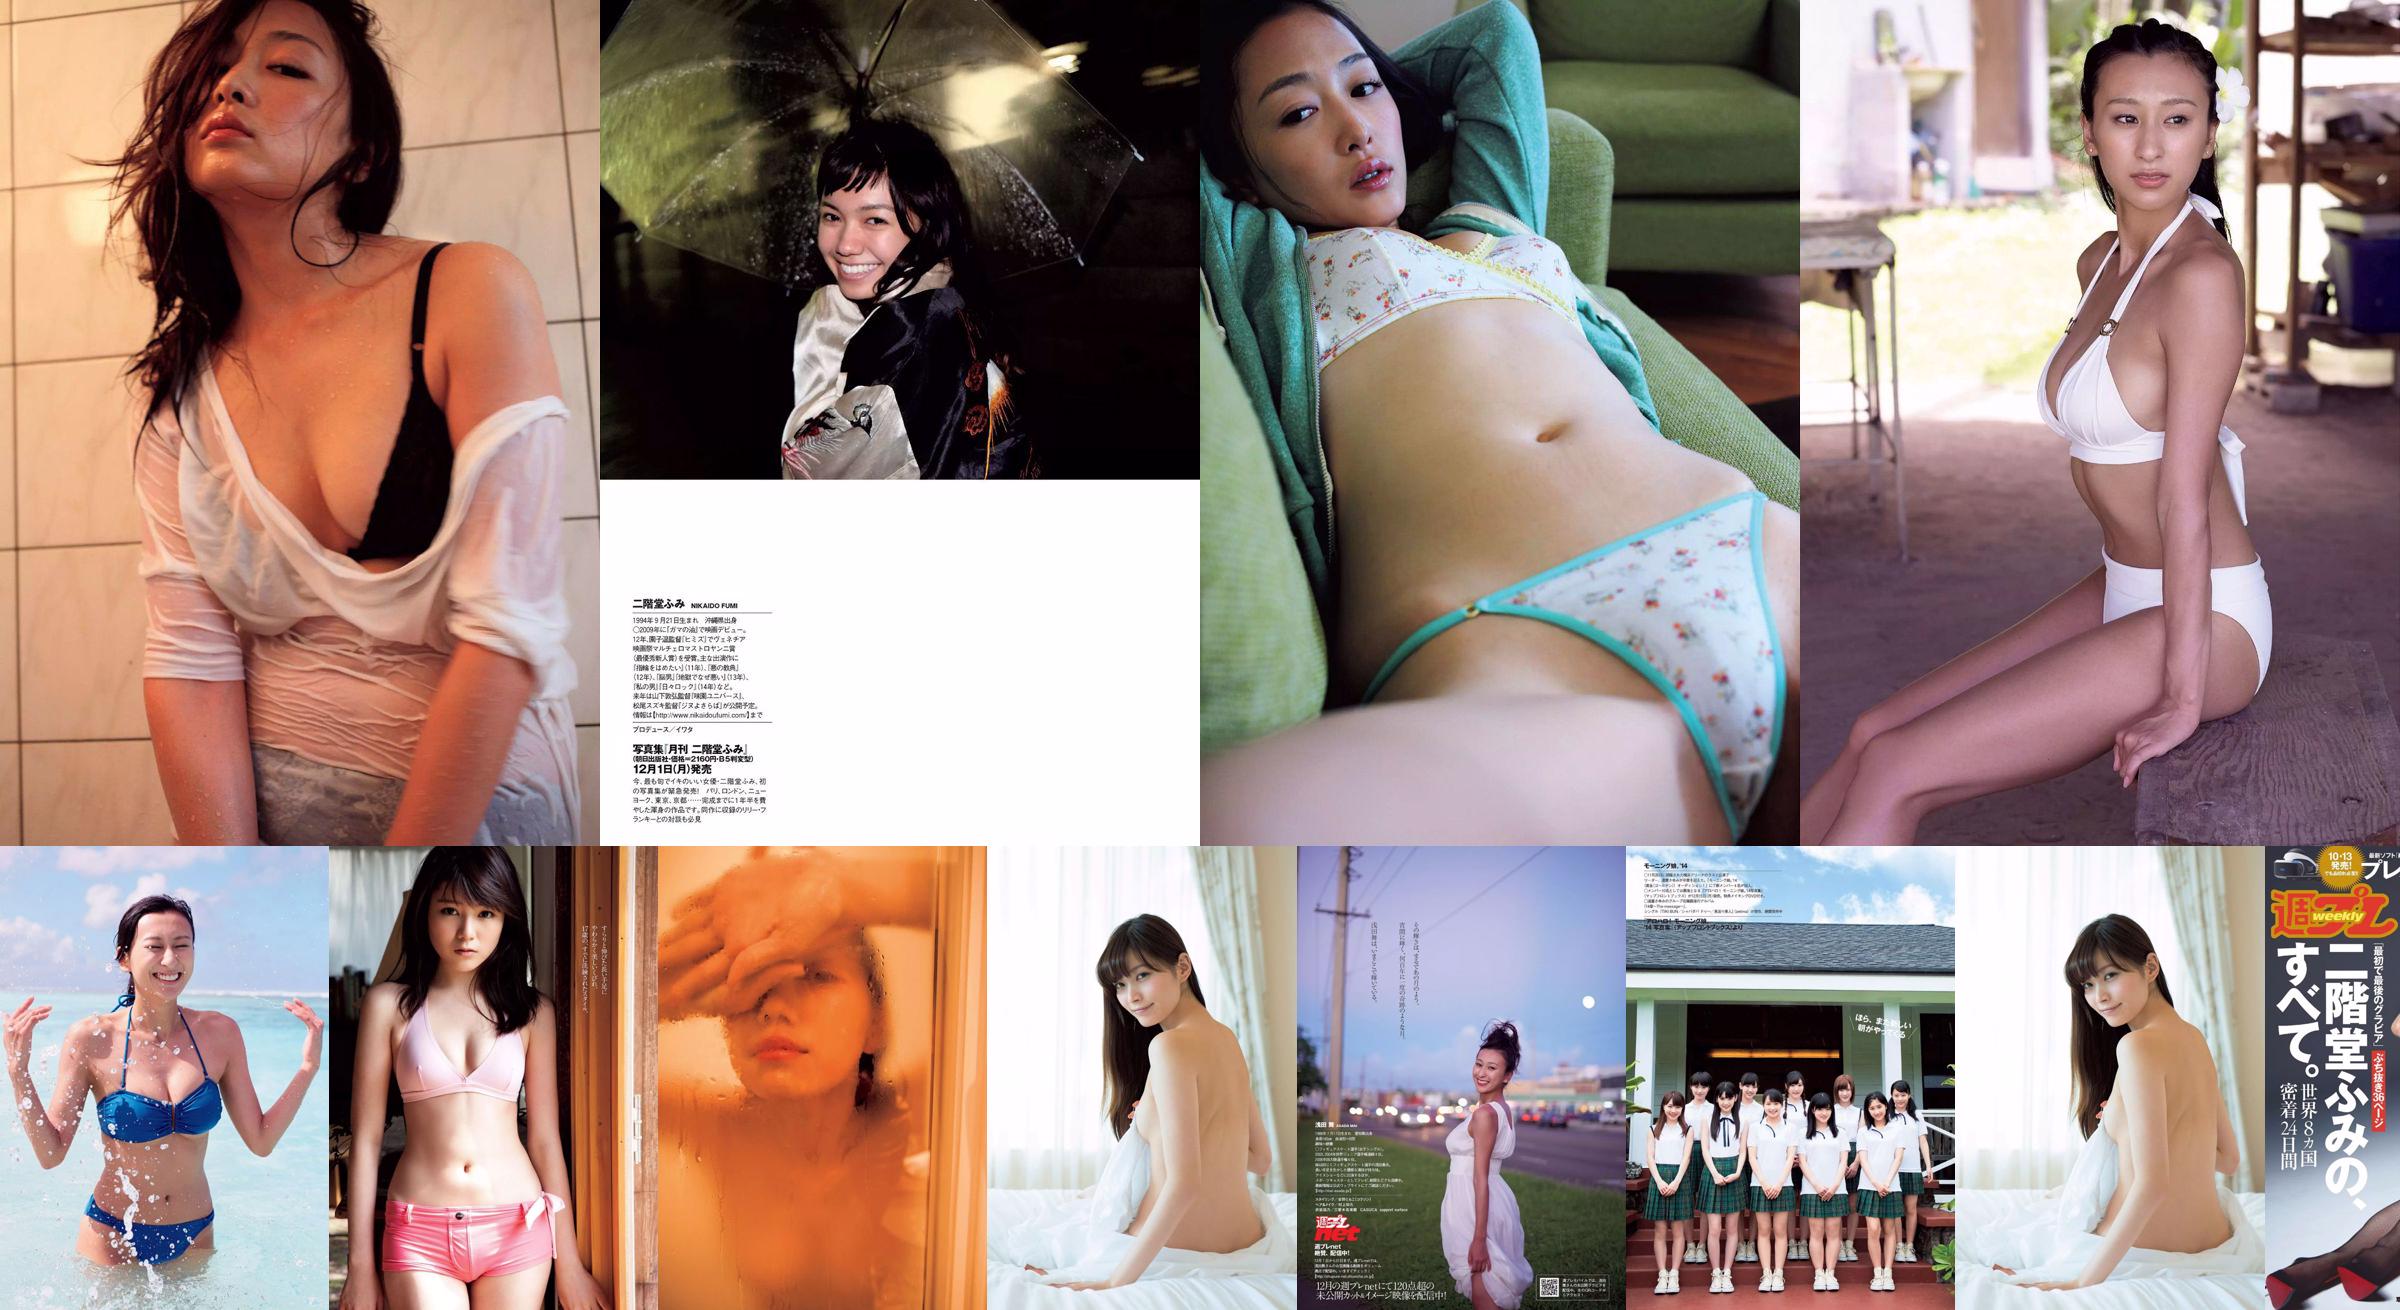 Fumi Nikaido [Playboy semanal] 2016 No.43 Photo Magazine No.1552ad Página 1